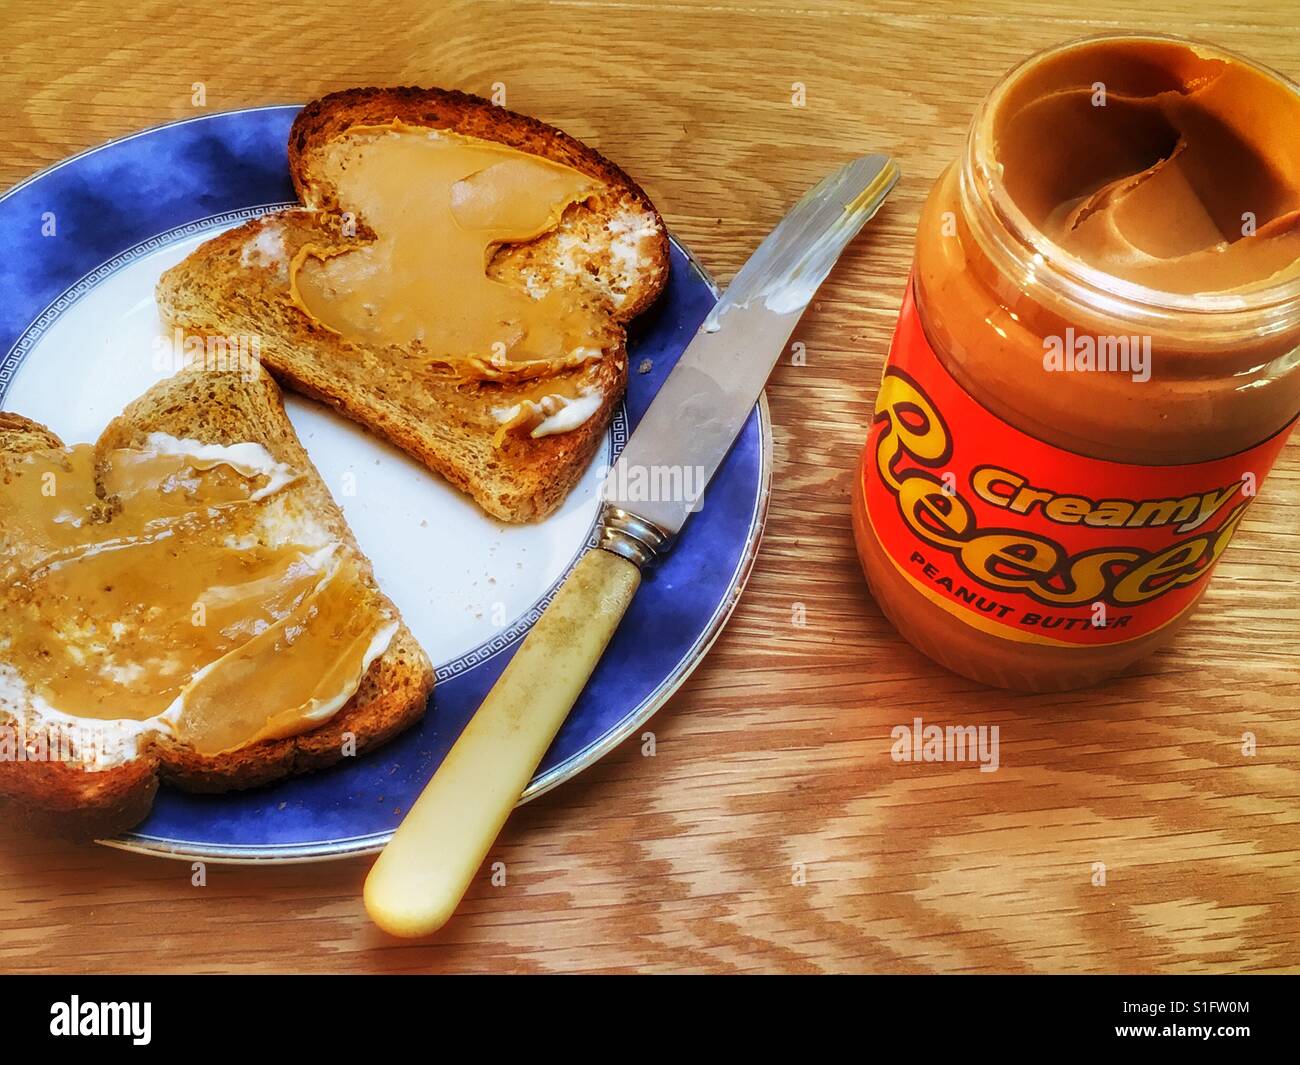 Creamy Reese's Peanut butter